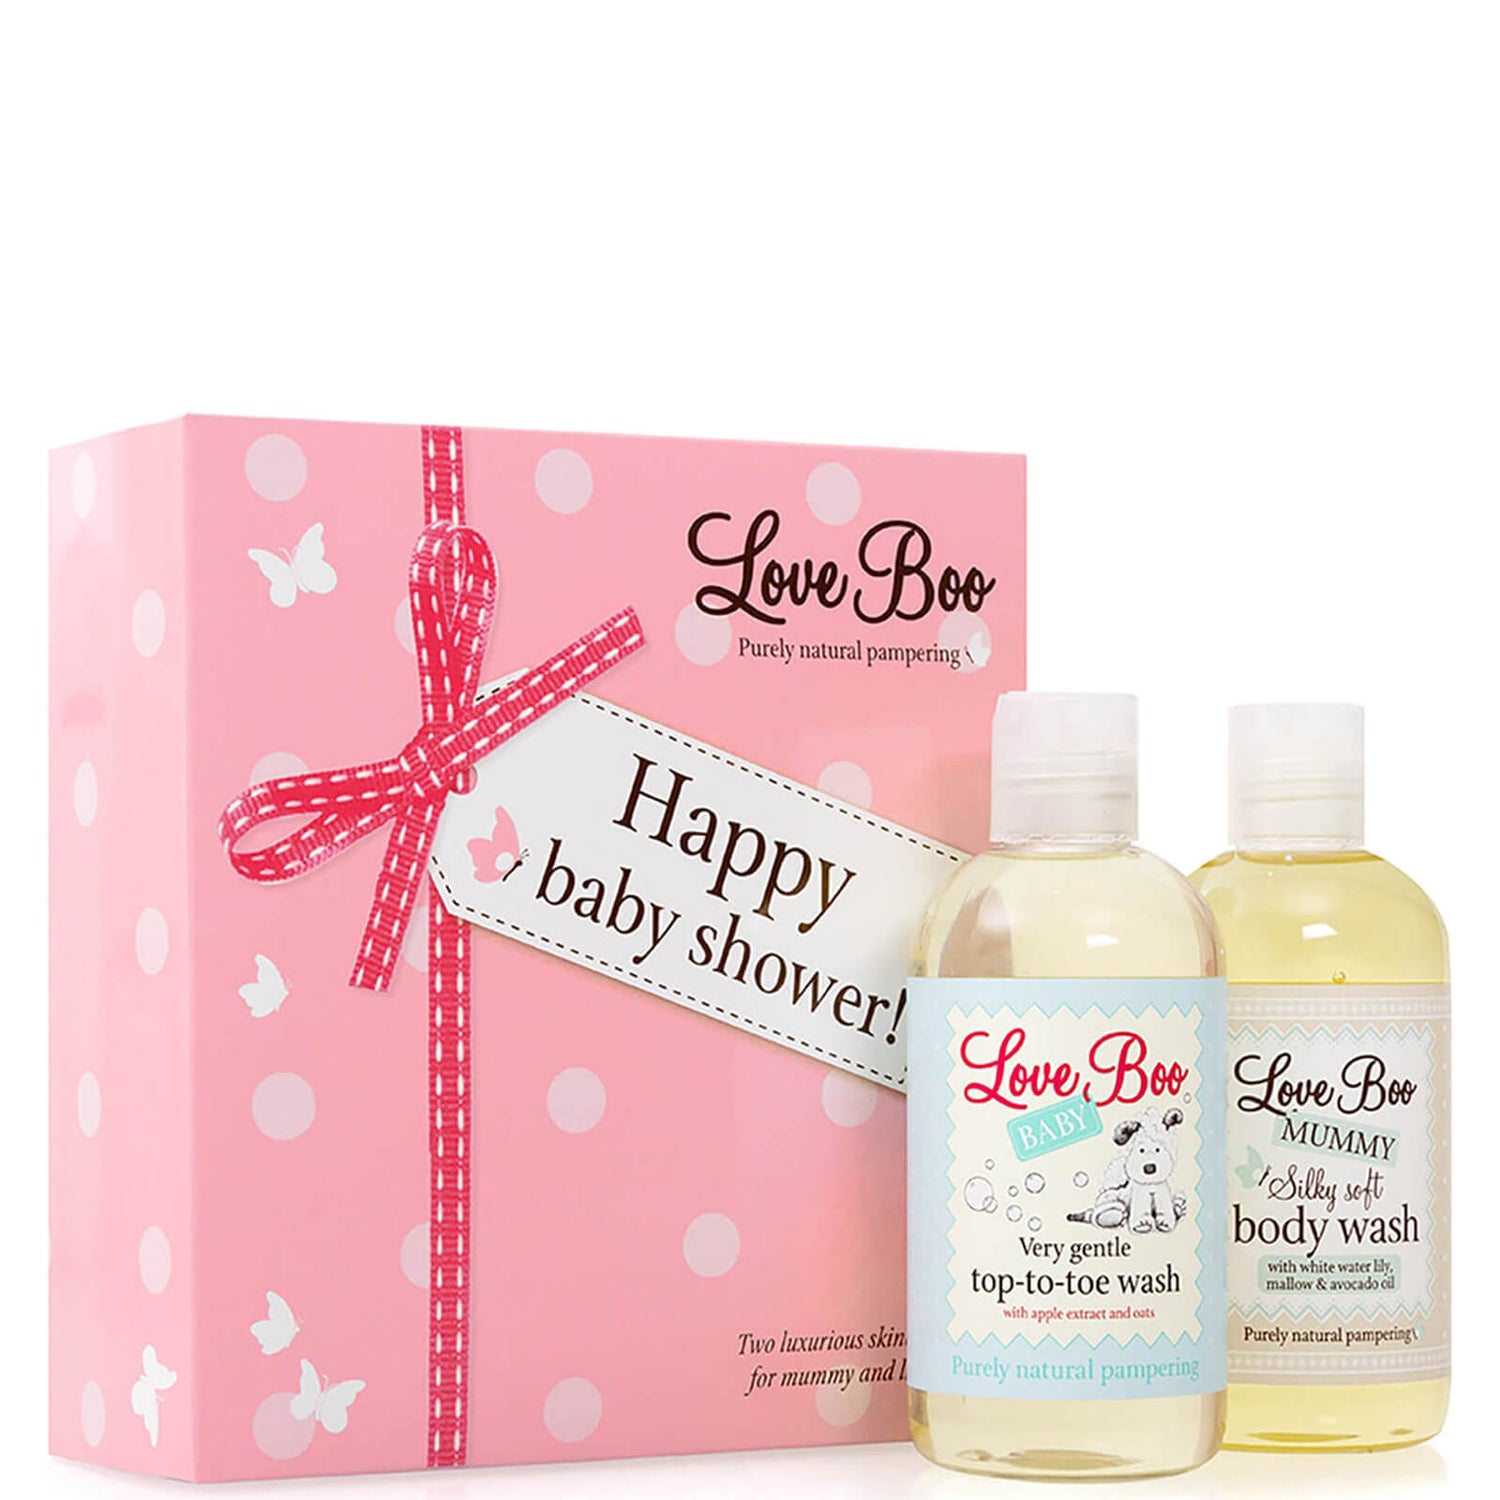 Conjunto para Bebé e Mamã Happy Baby Shower - Gel de Duche and Top To Toe da Love Boo